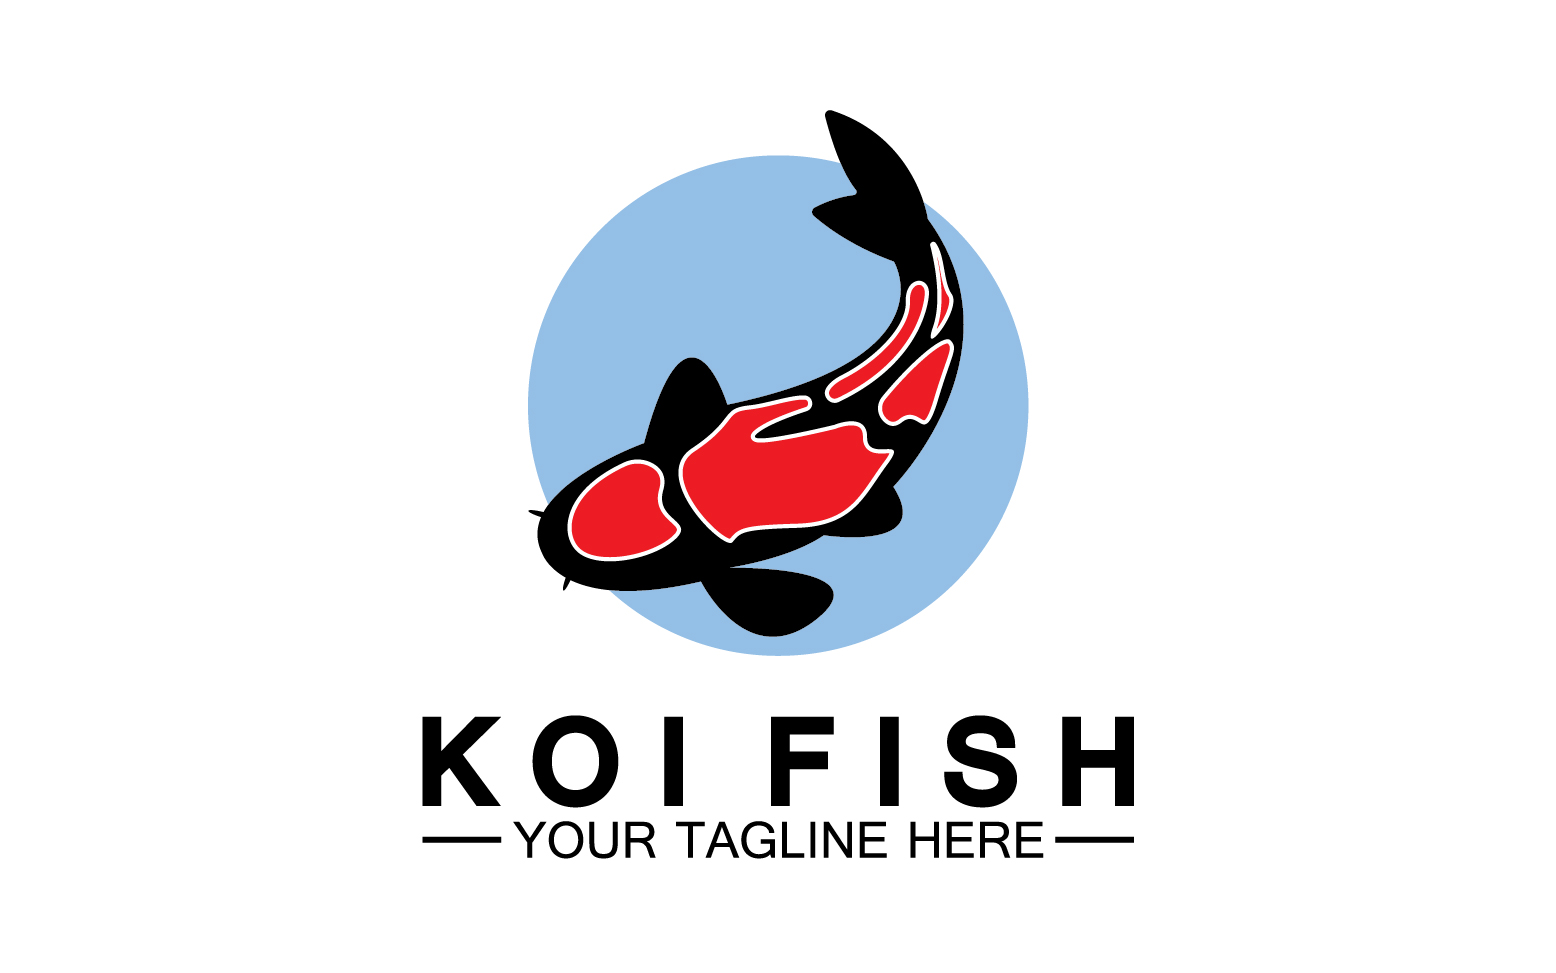 Fish koi black and red icon logo vector v41